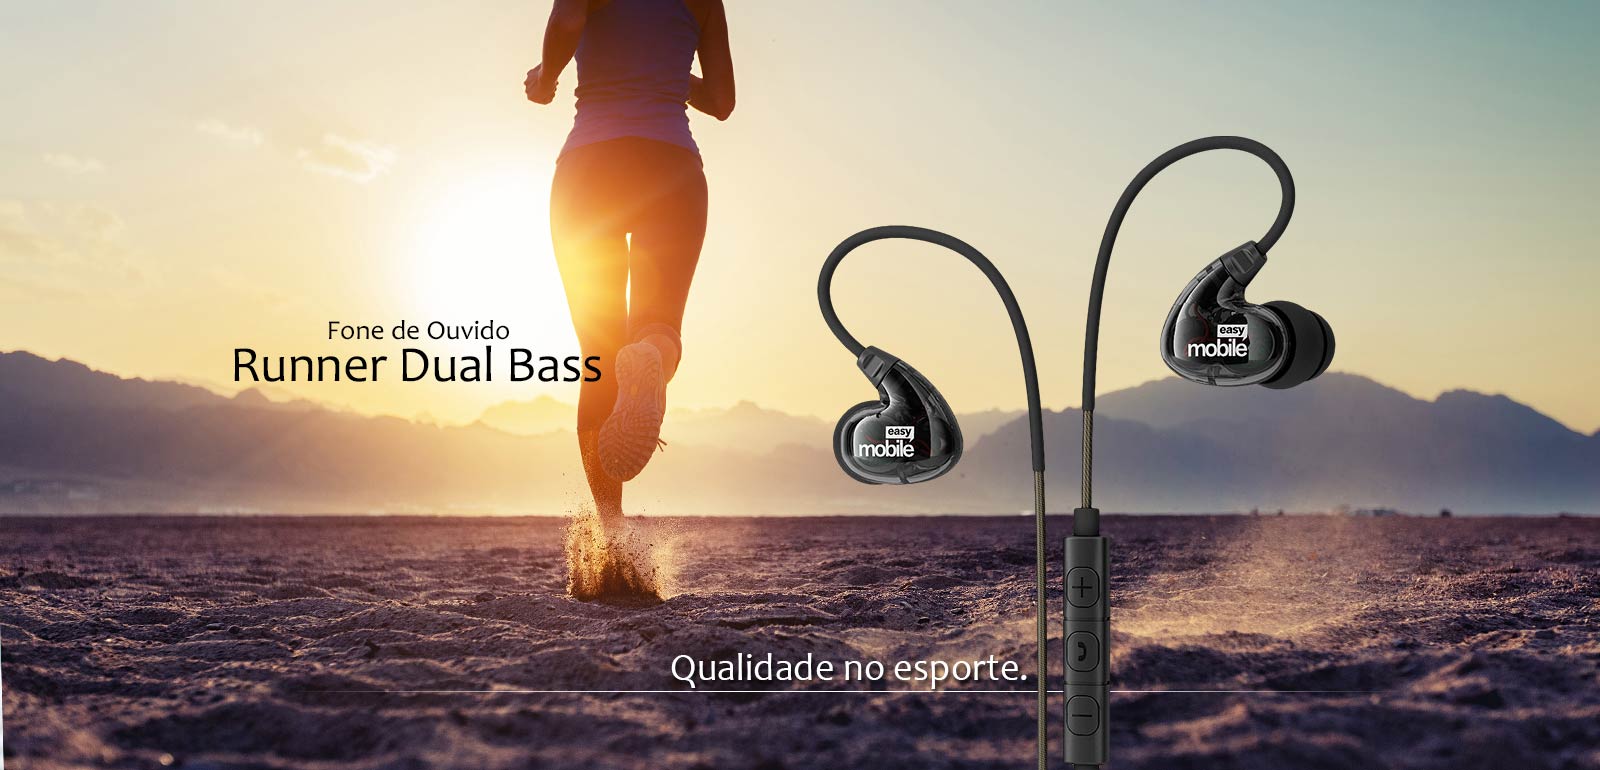 Runner Dual Bass Fone de Ouvido Easy Mobile Sport Headphone